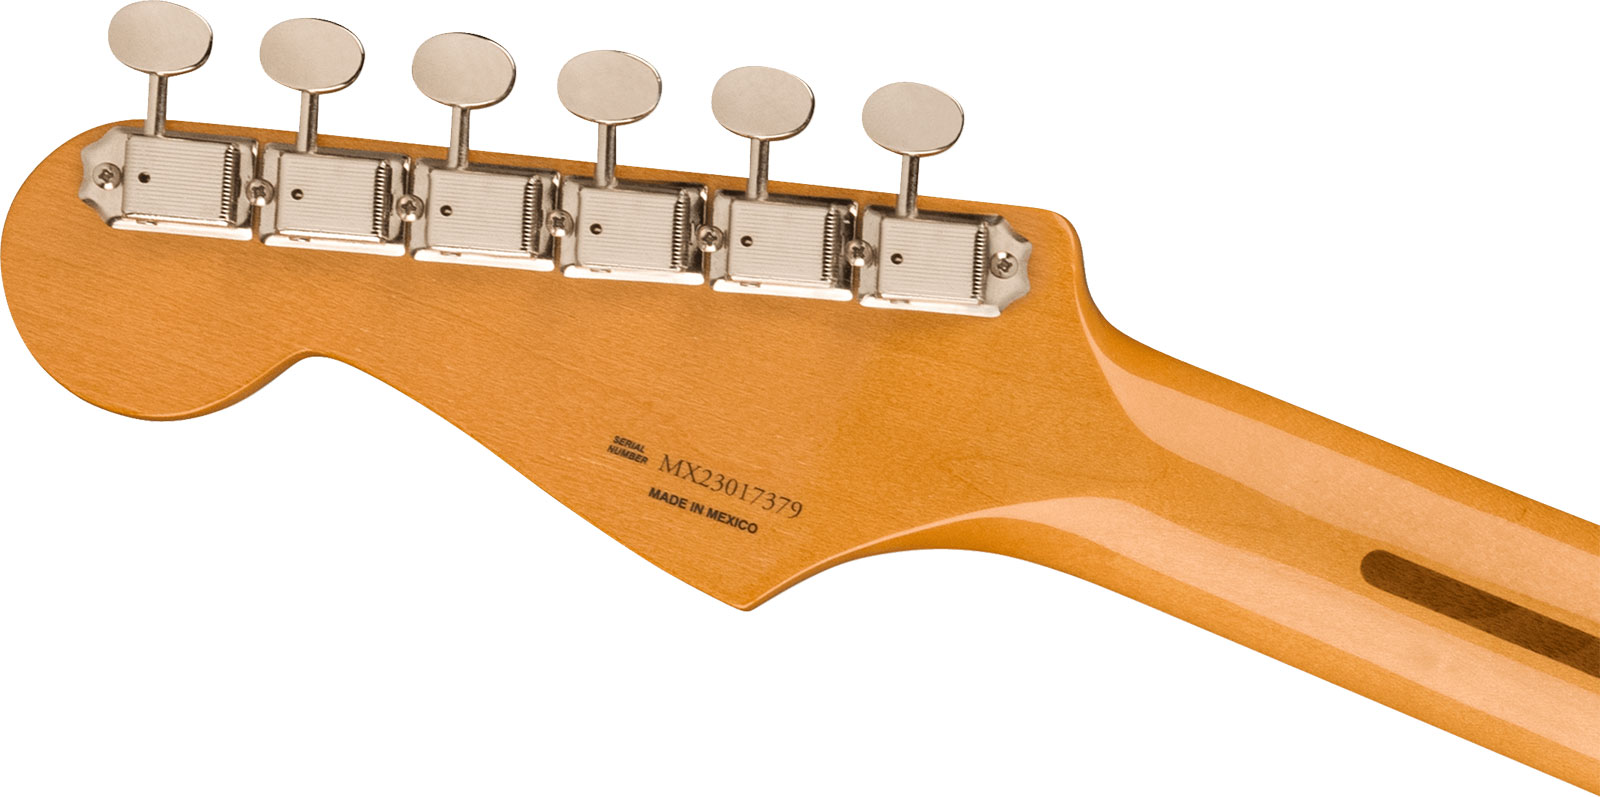 Fender Strat 50s Vintera 2 Mex 3s Trem Mn - Black - E-Gitarre in Str-Form - Variation 3